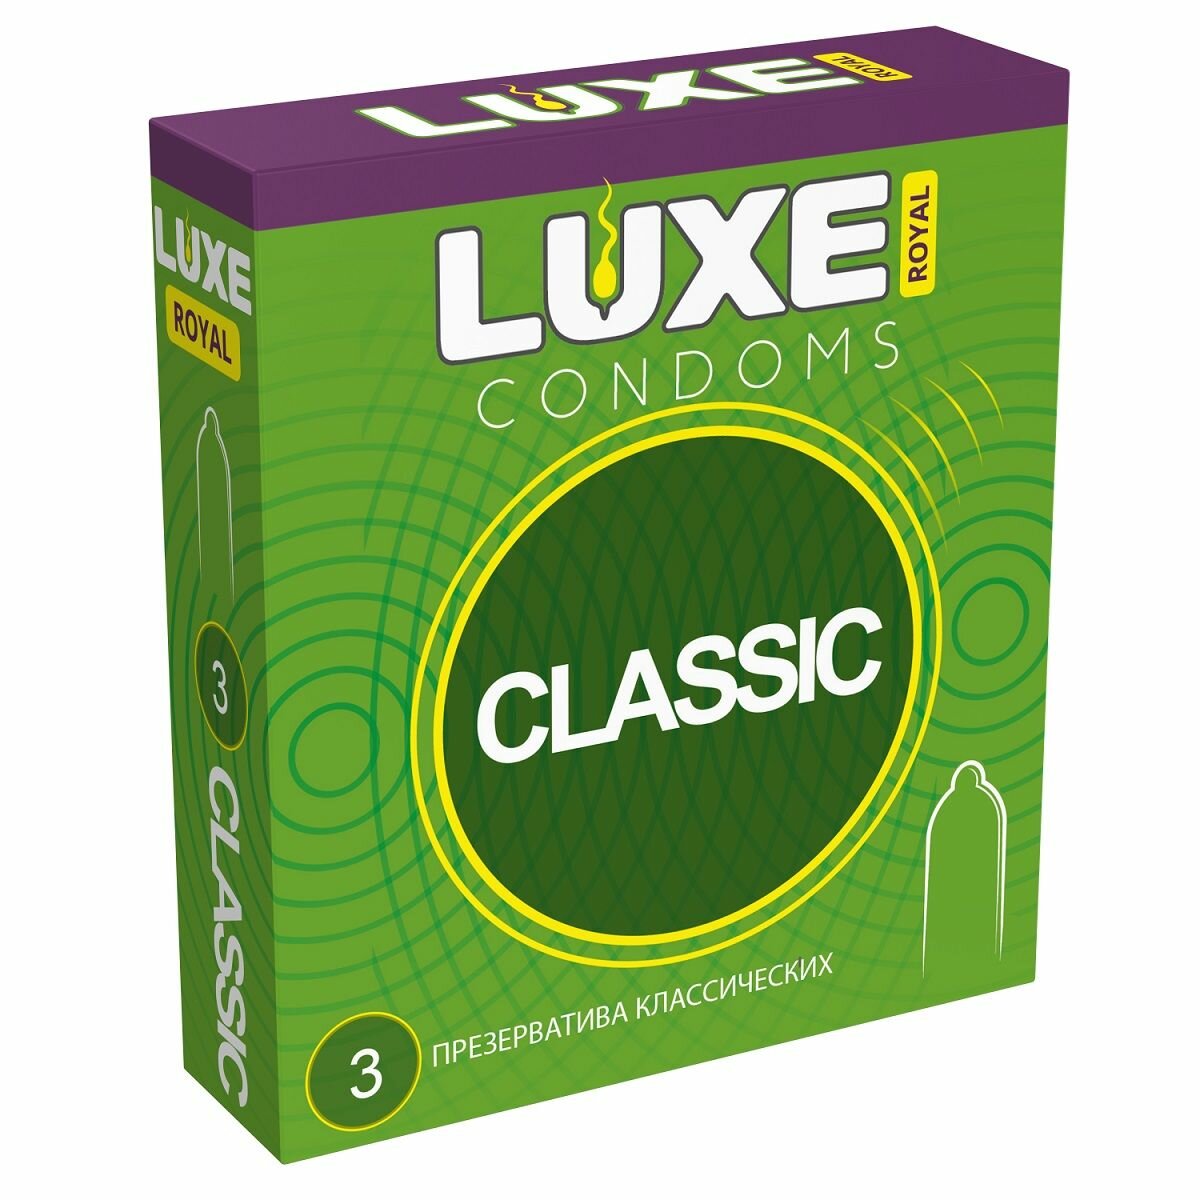 Гладкие презервативы LUXE Royal Classic - 3 шт, цвет не указан, 2 штуки